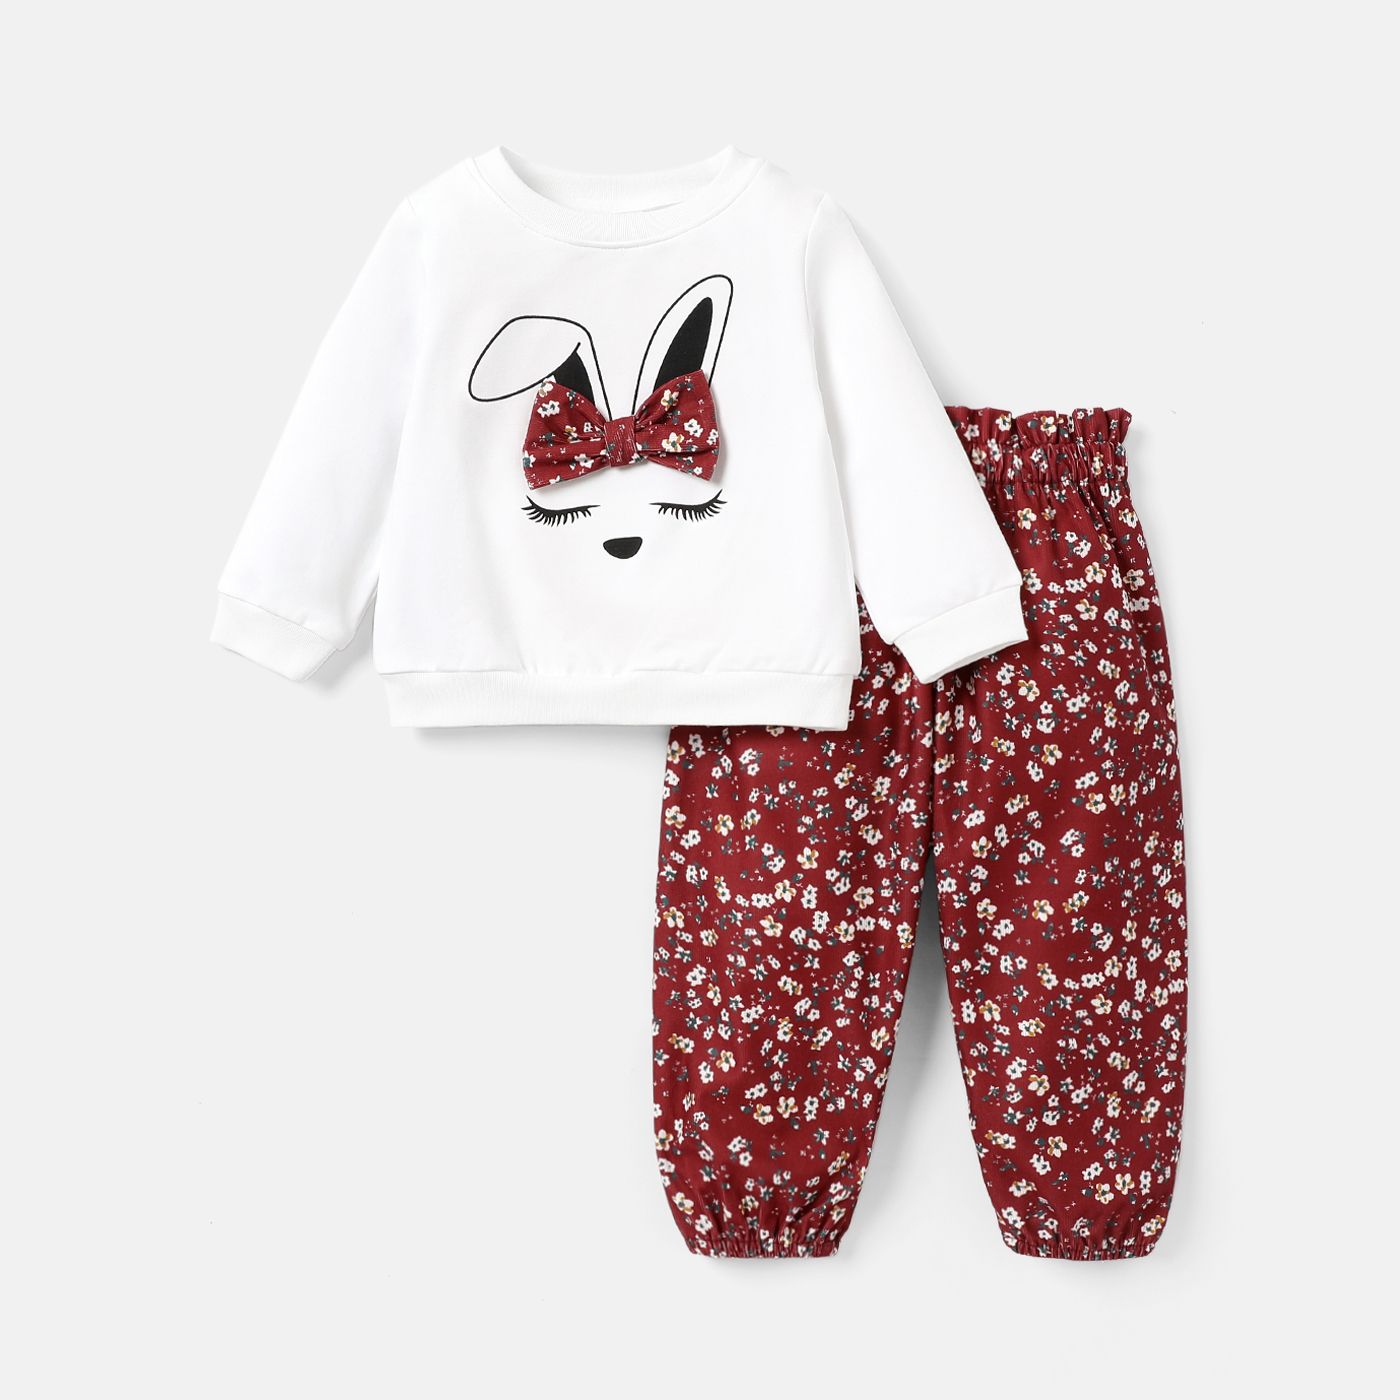 2pcs Baby Girl Rabbit Graphic Long-sleeve Cotton Sweatshirt and Floral Print Pants Set